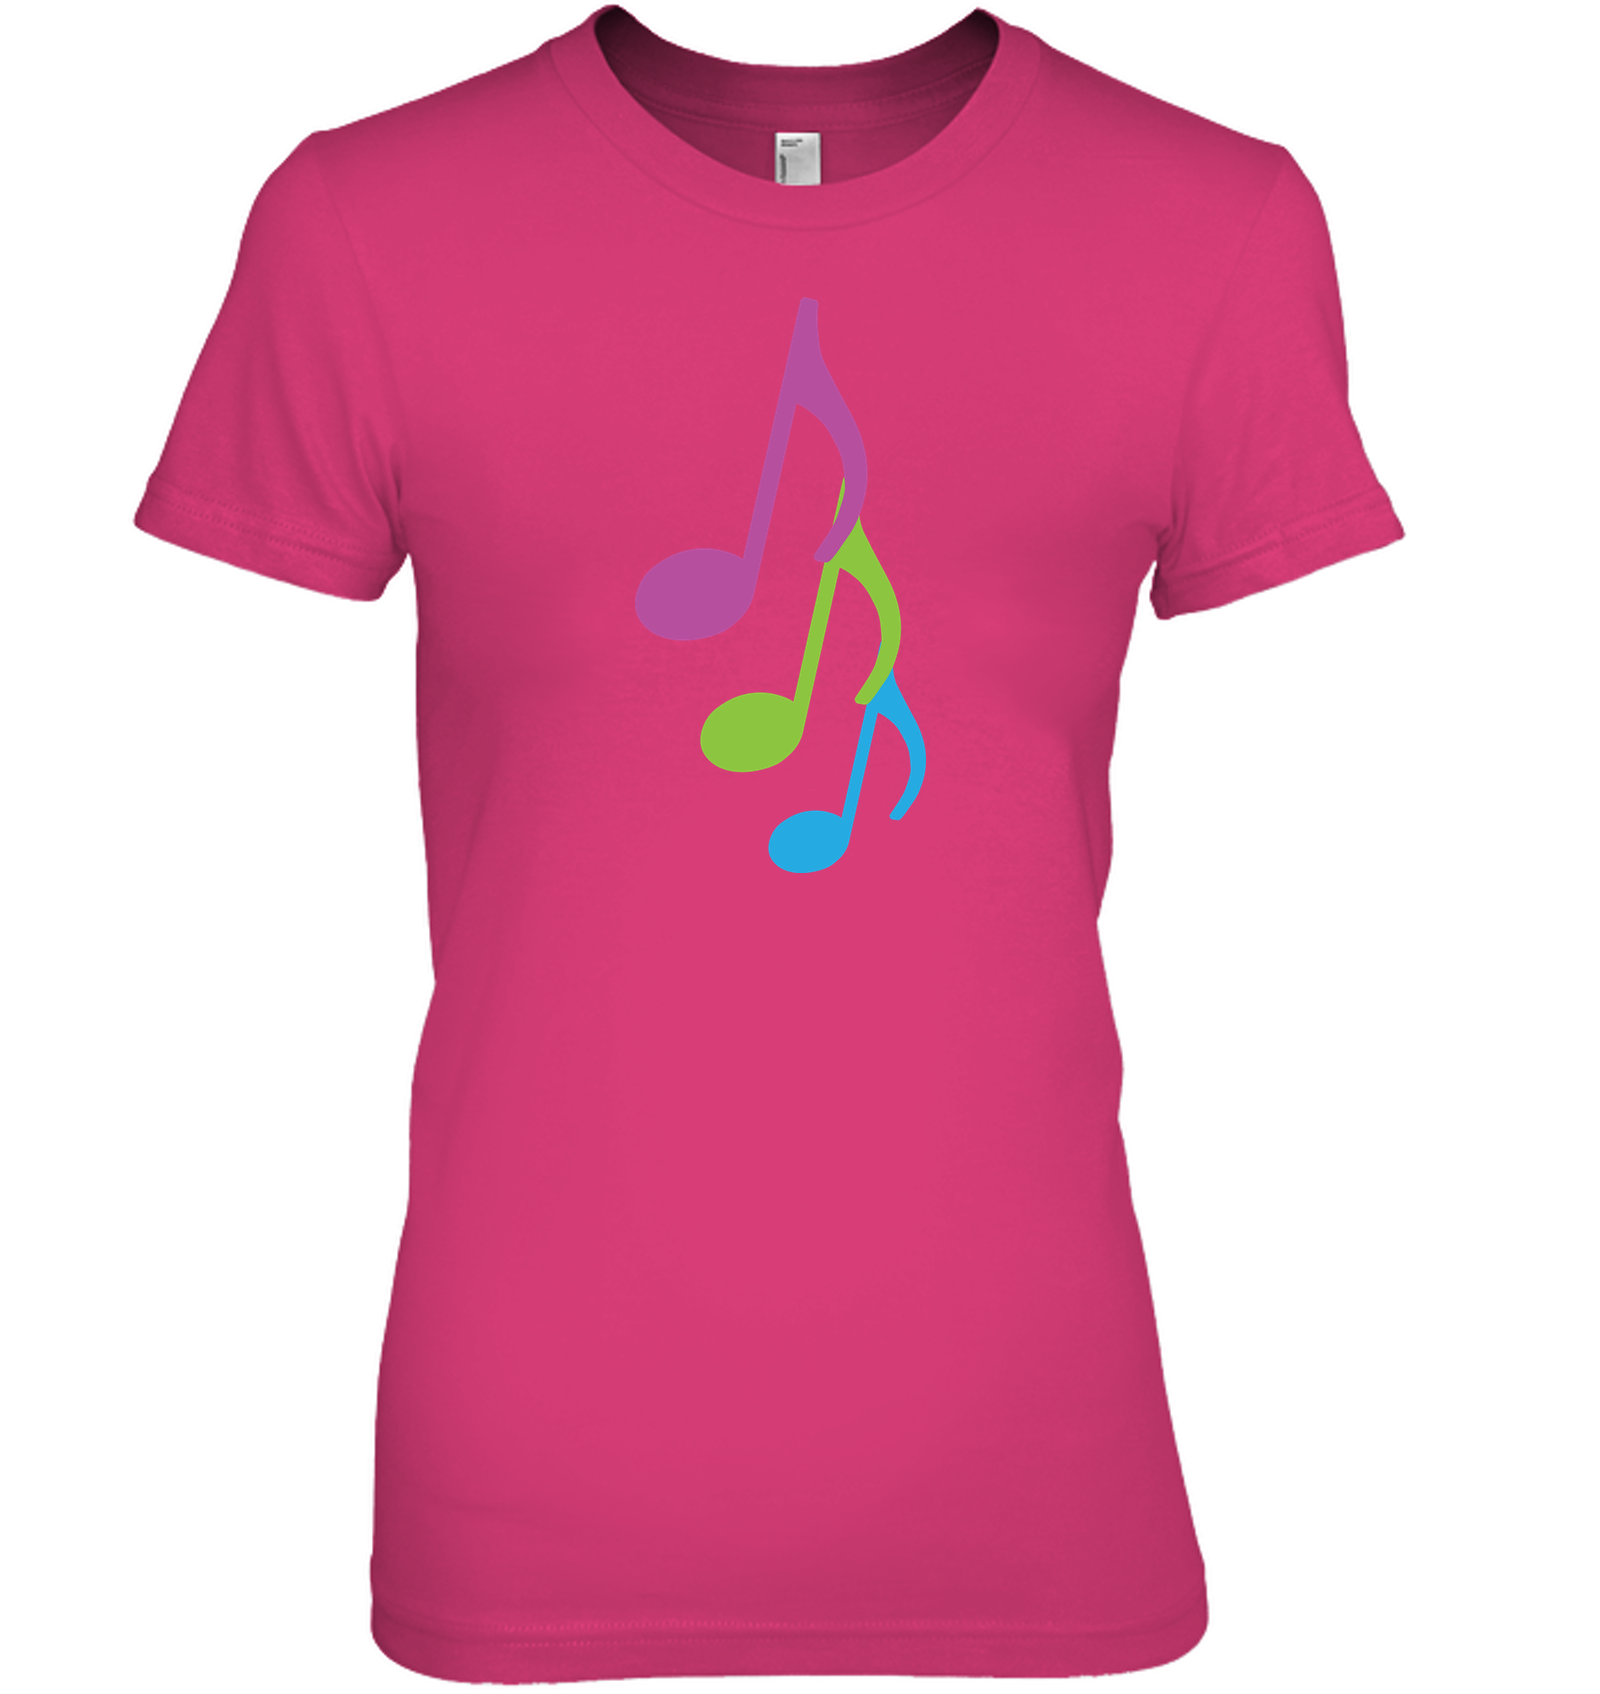 Three colorful musical notes - Hanes Women's Nano-T® T-Shirt